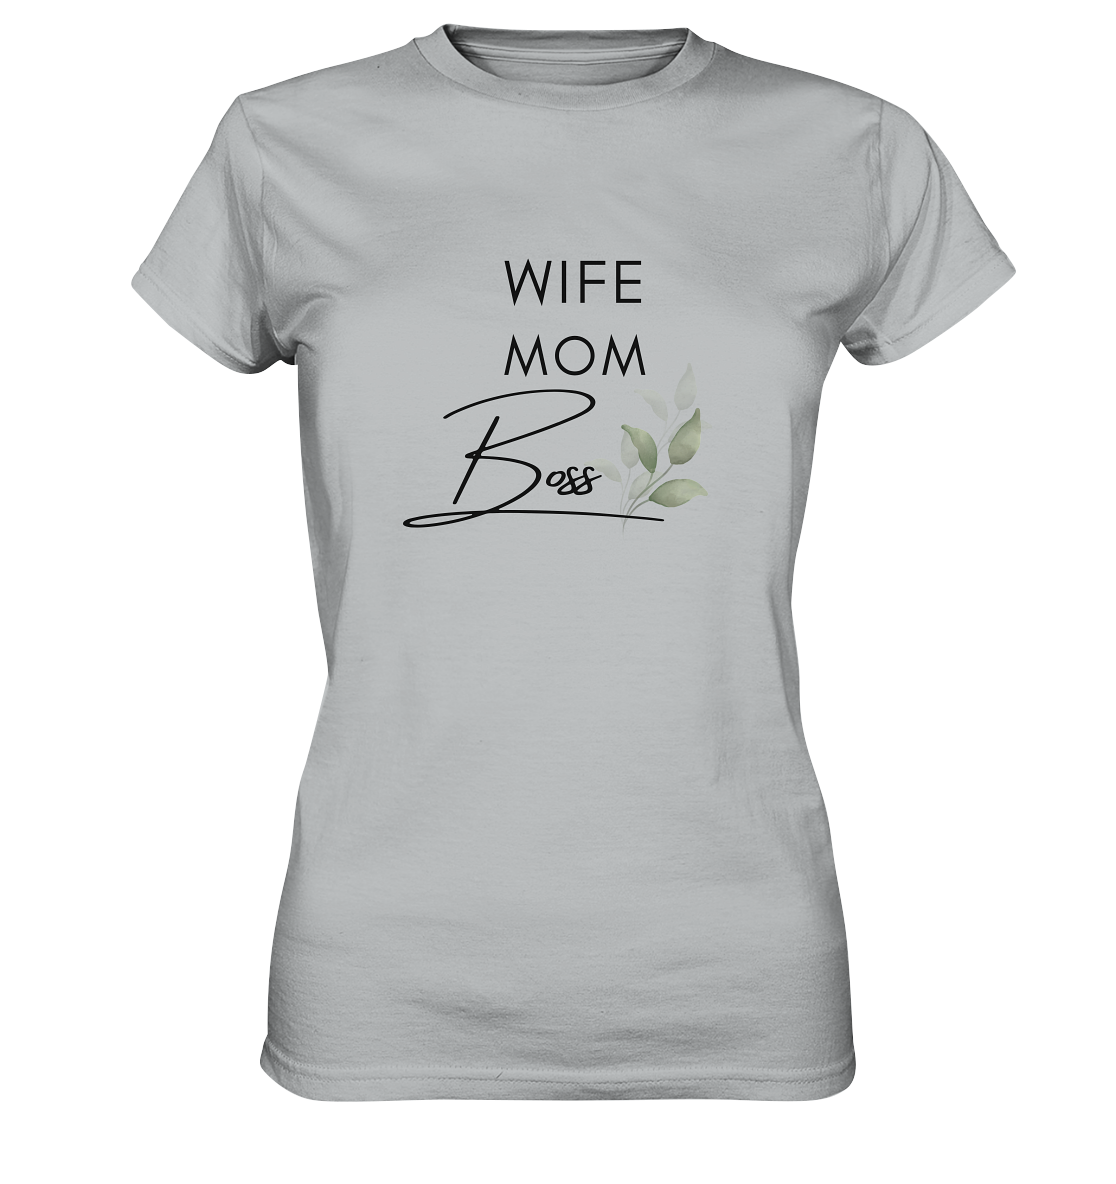 Wife. Mom. Boss. - Ladies Premium Shirt